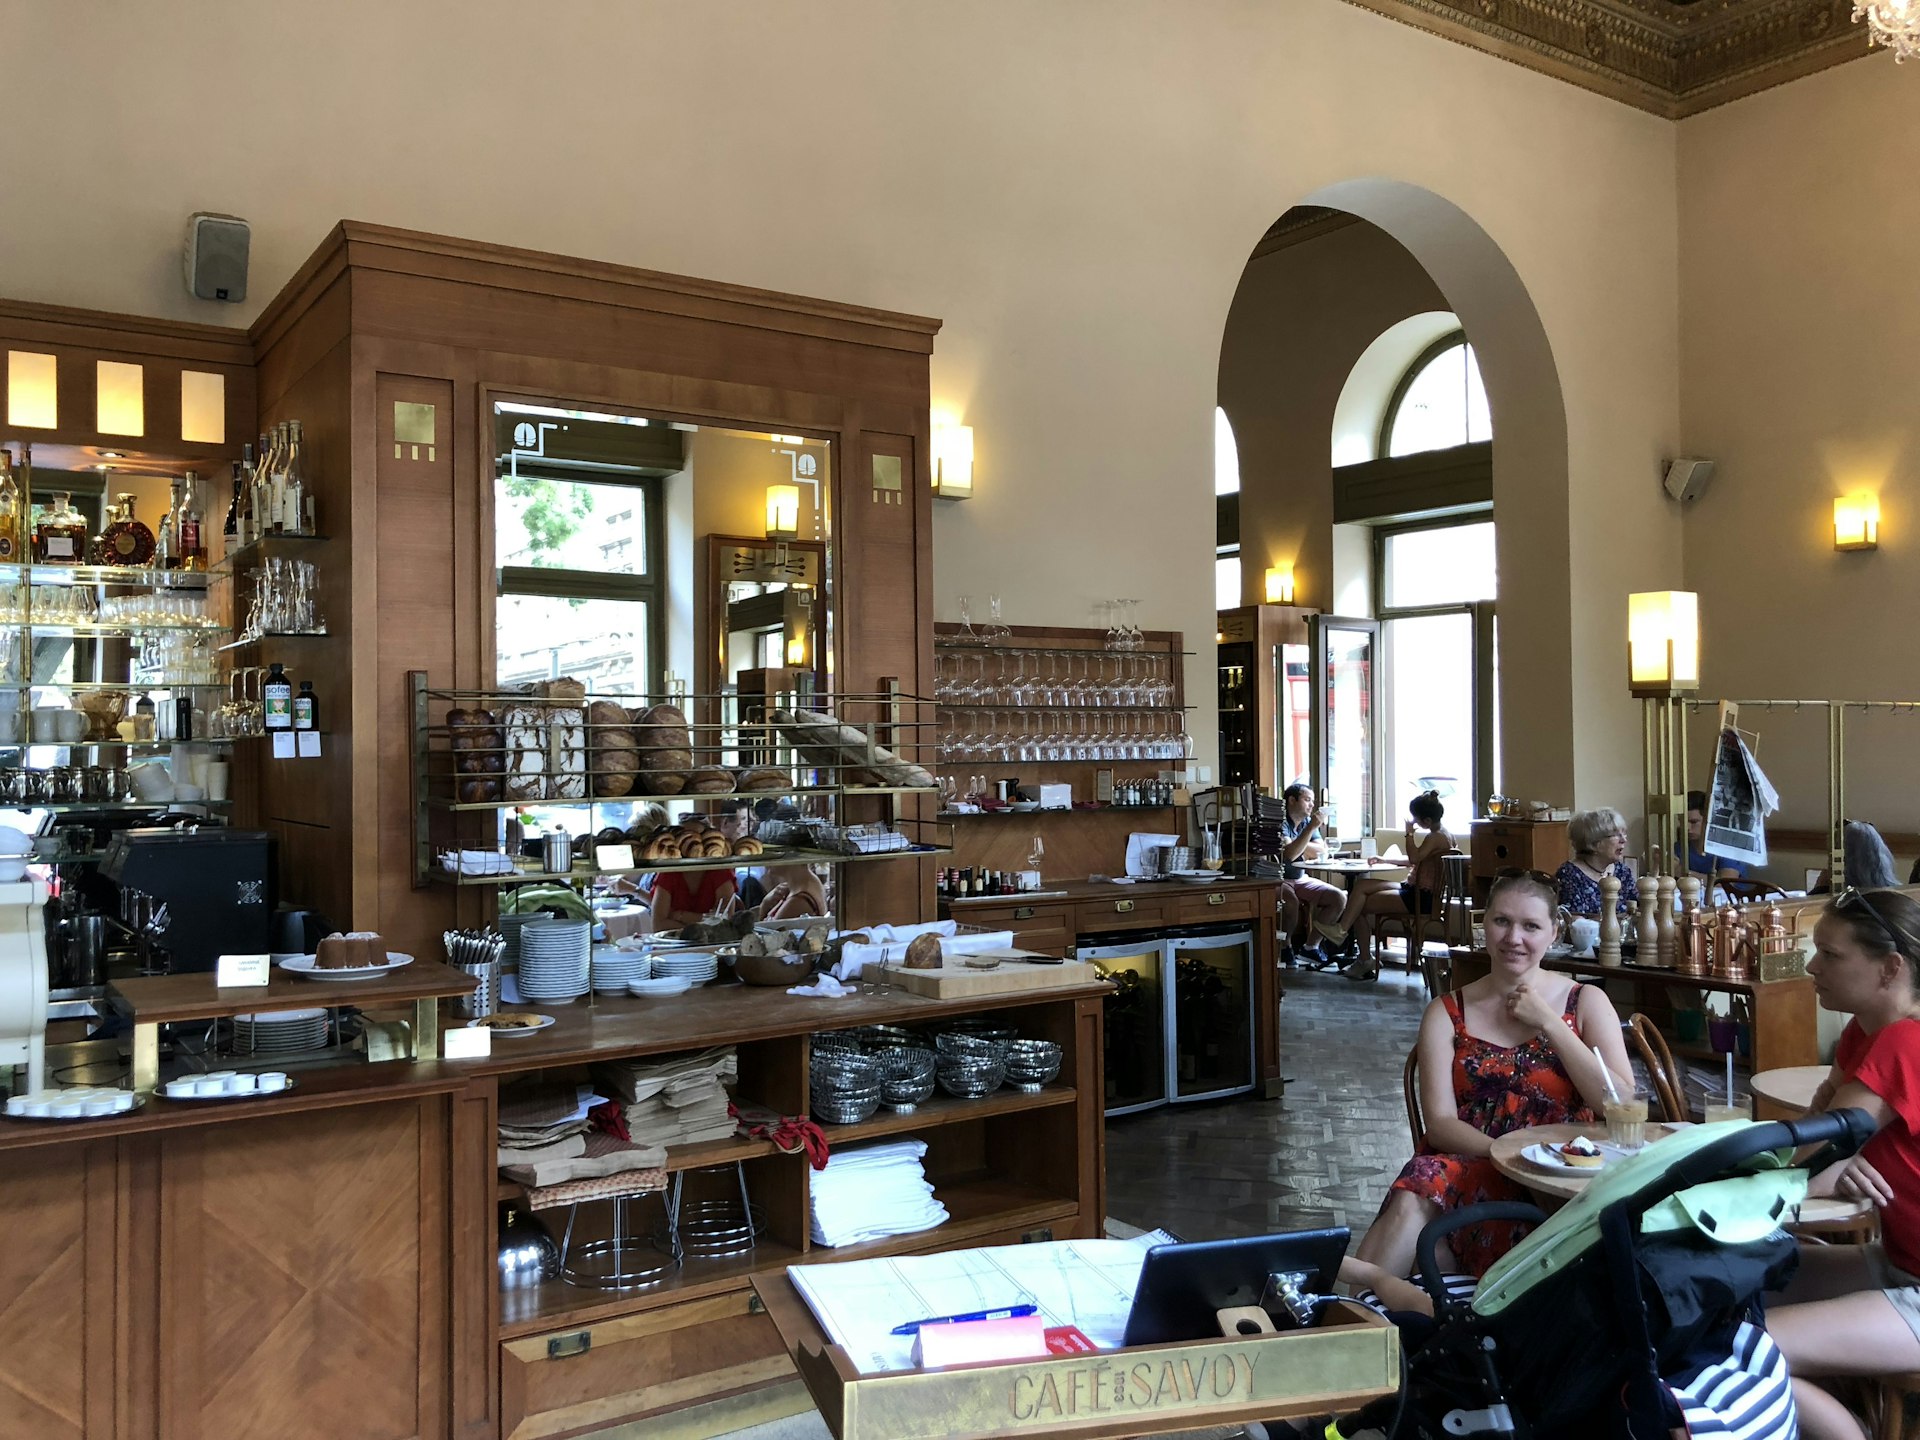 Café Savoy Prague interior with customers sat at tables